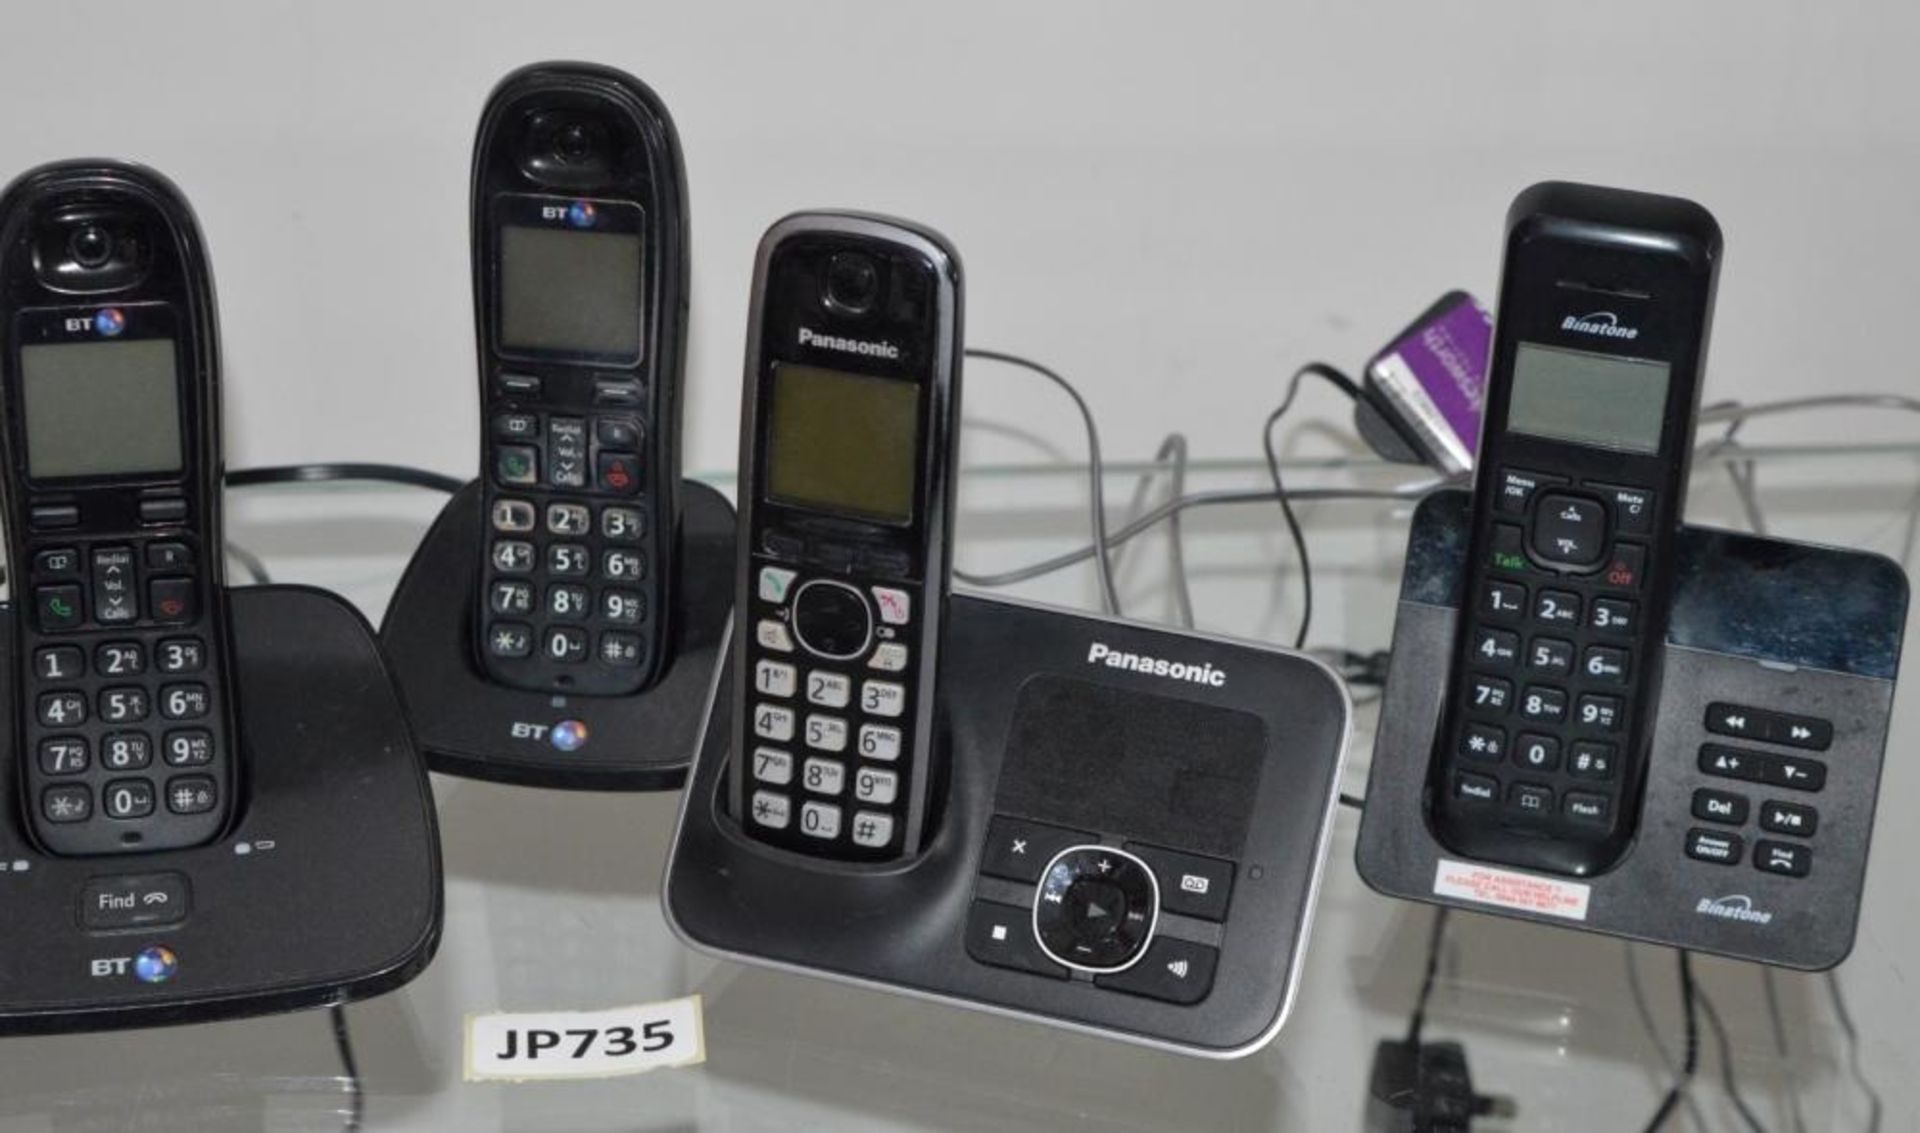 6 x Cordless Phone Handsets - Includes BT, Binatone and Panasonic Models - CL285 - Ref JP735 - Locat - Image 4 of 4